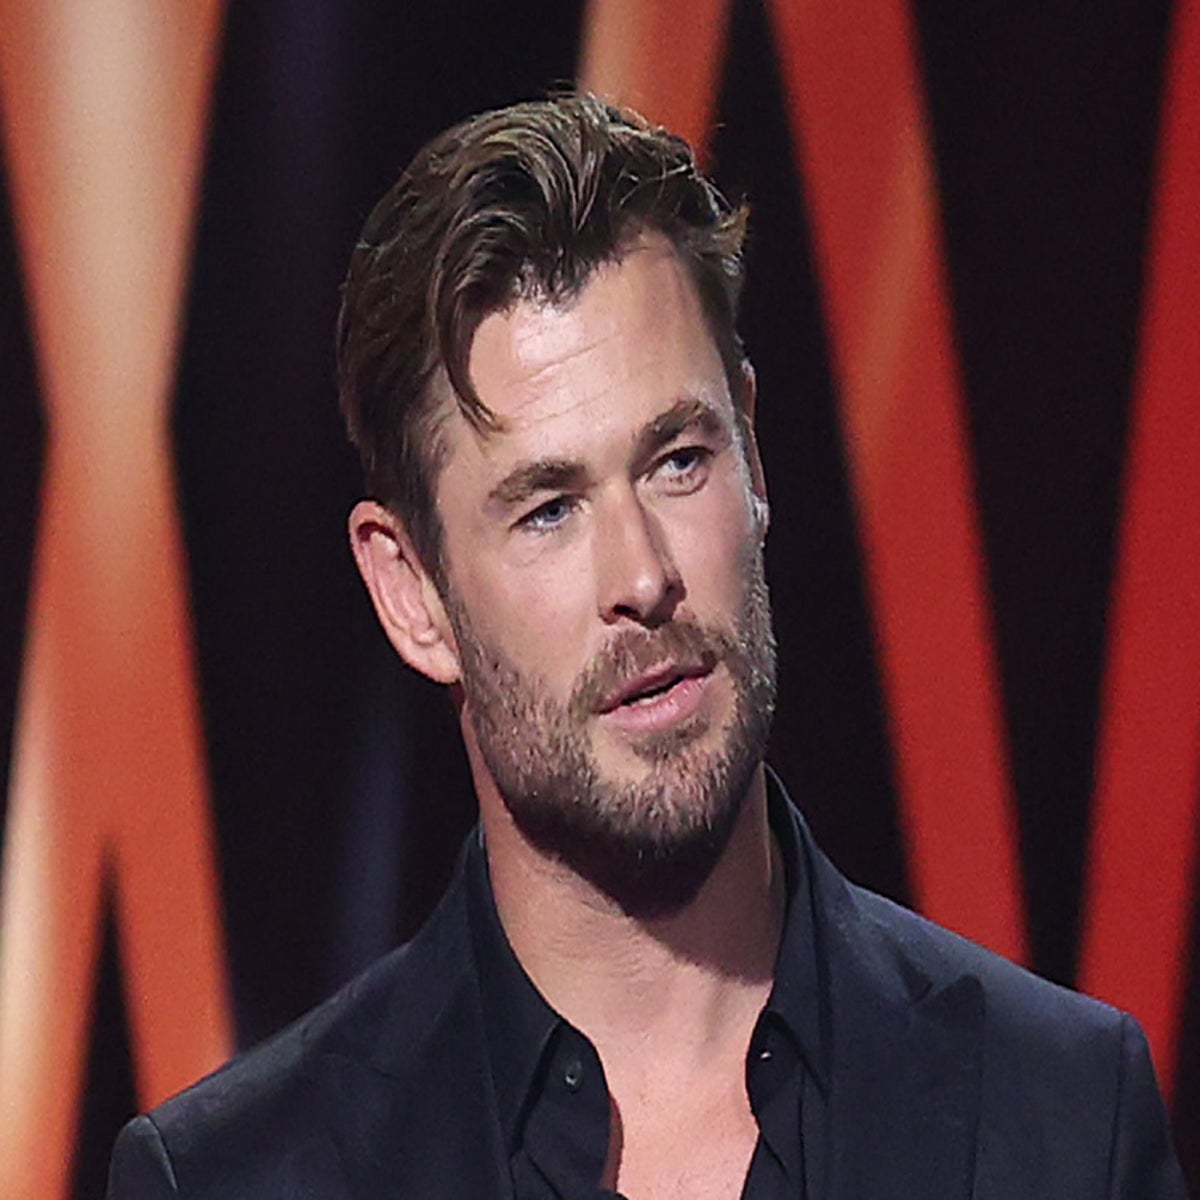 Chris Hemsworth reveals he sometimes got 'sick' of playing Thor